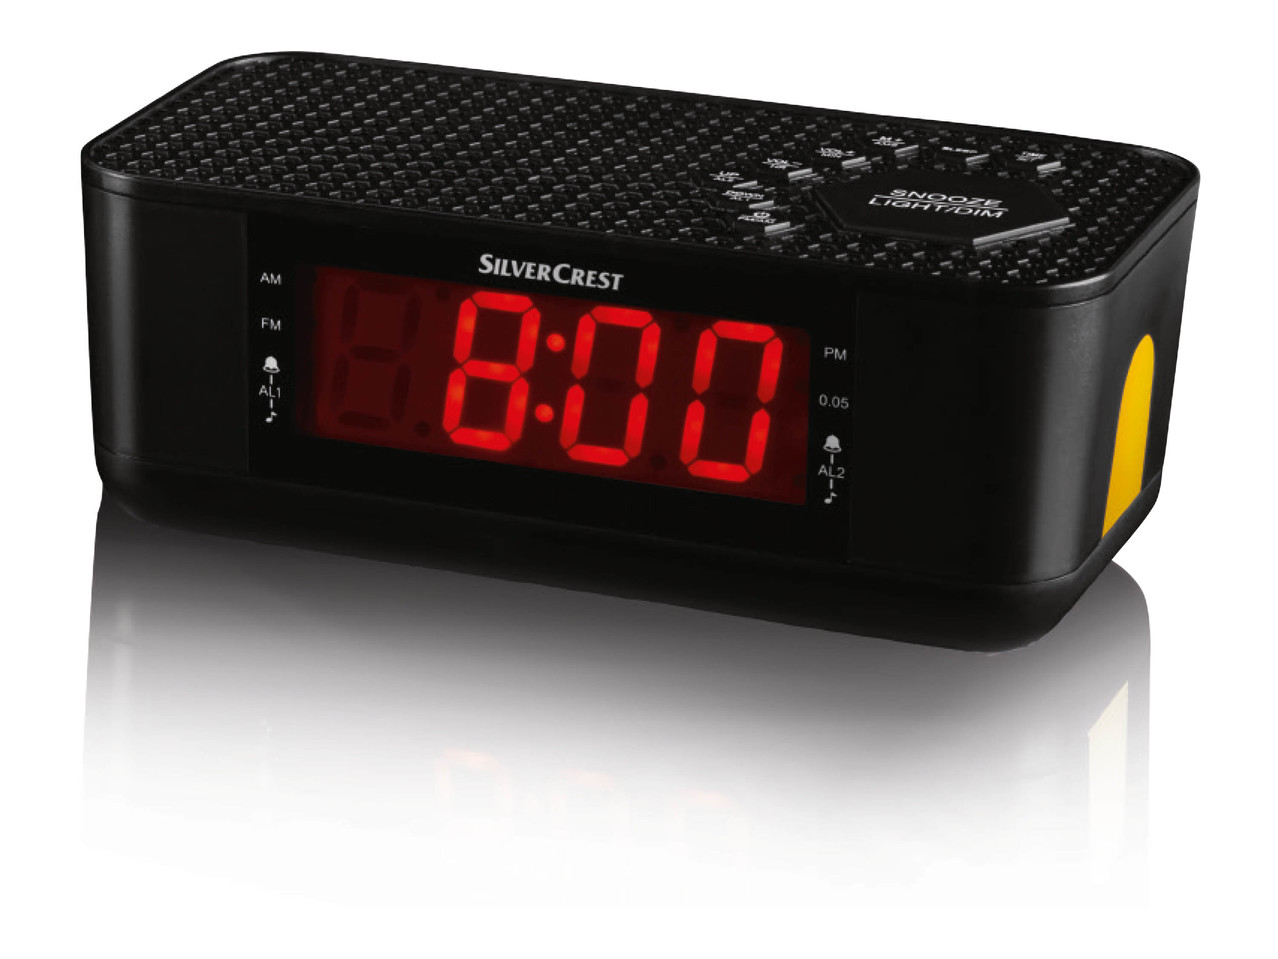 SILVERCREST FM Radio Alarm Clock